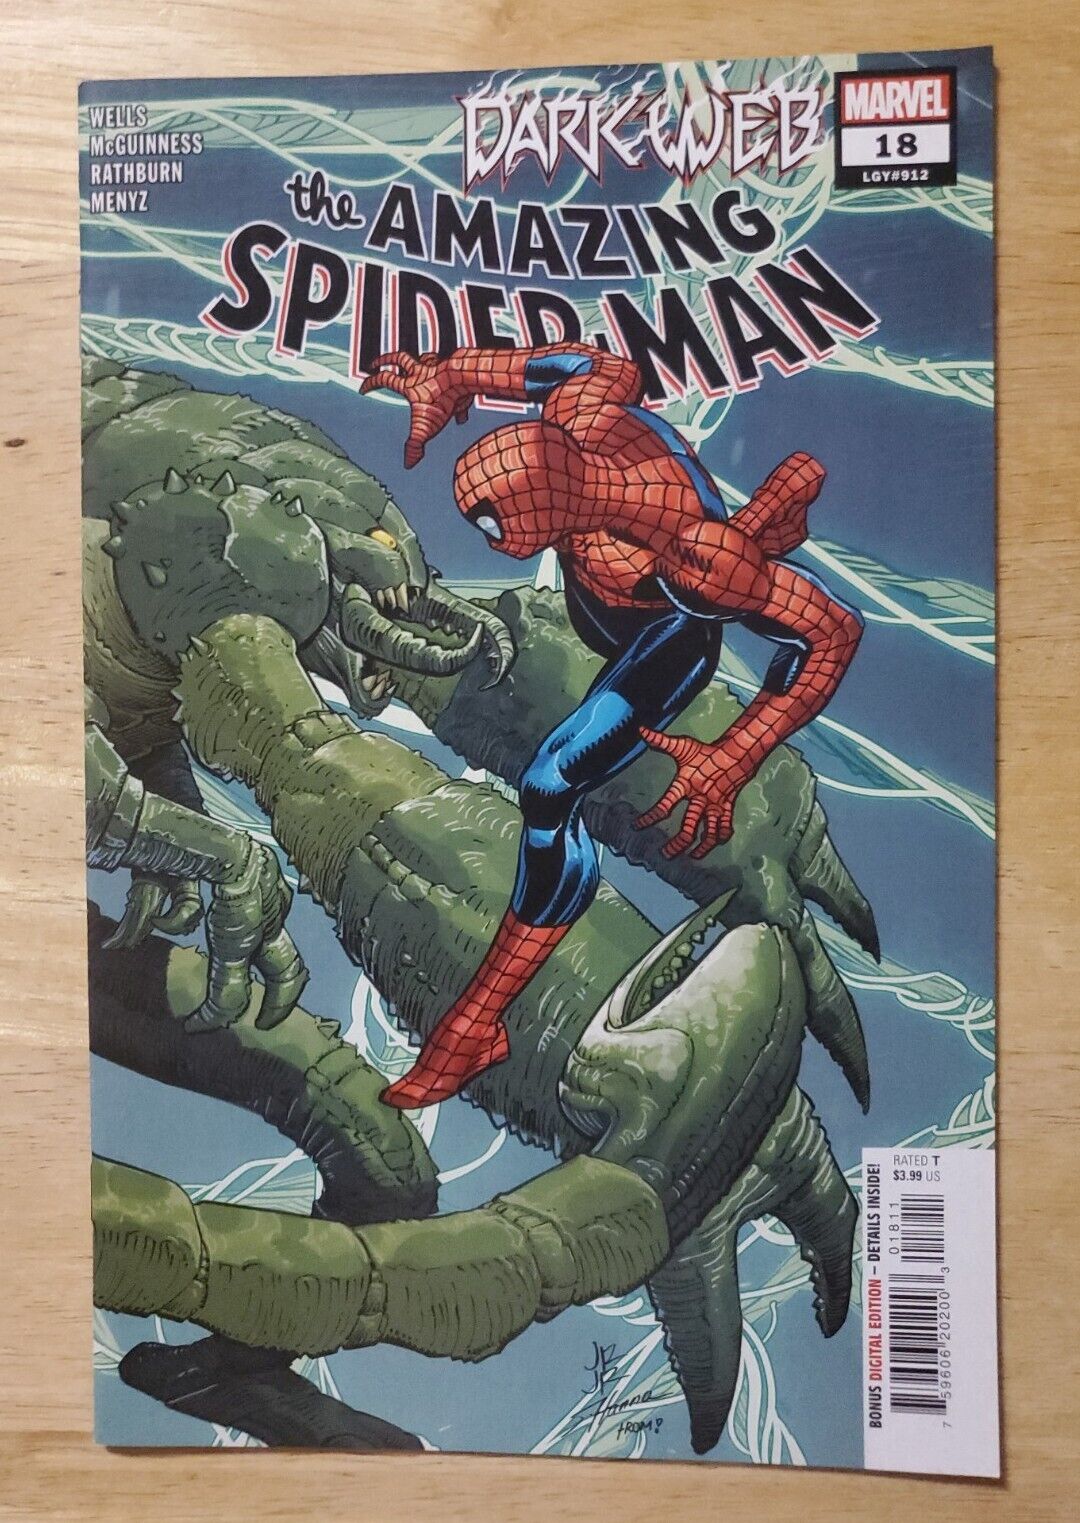 The Amazing Spider Man Dark Web Issue 18 (LGY #912) Marvel Comics 2023